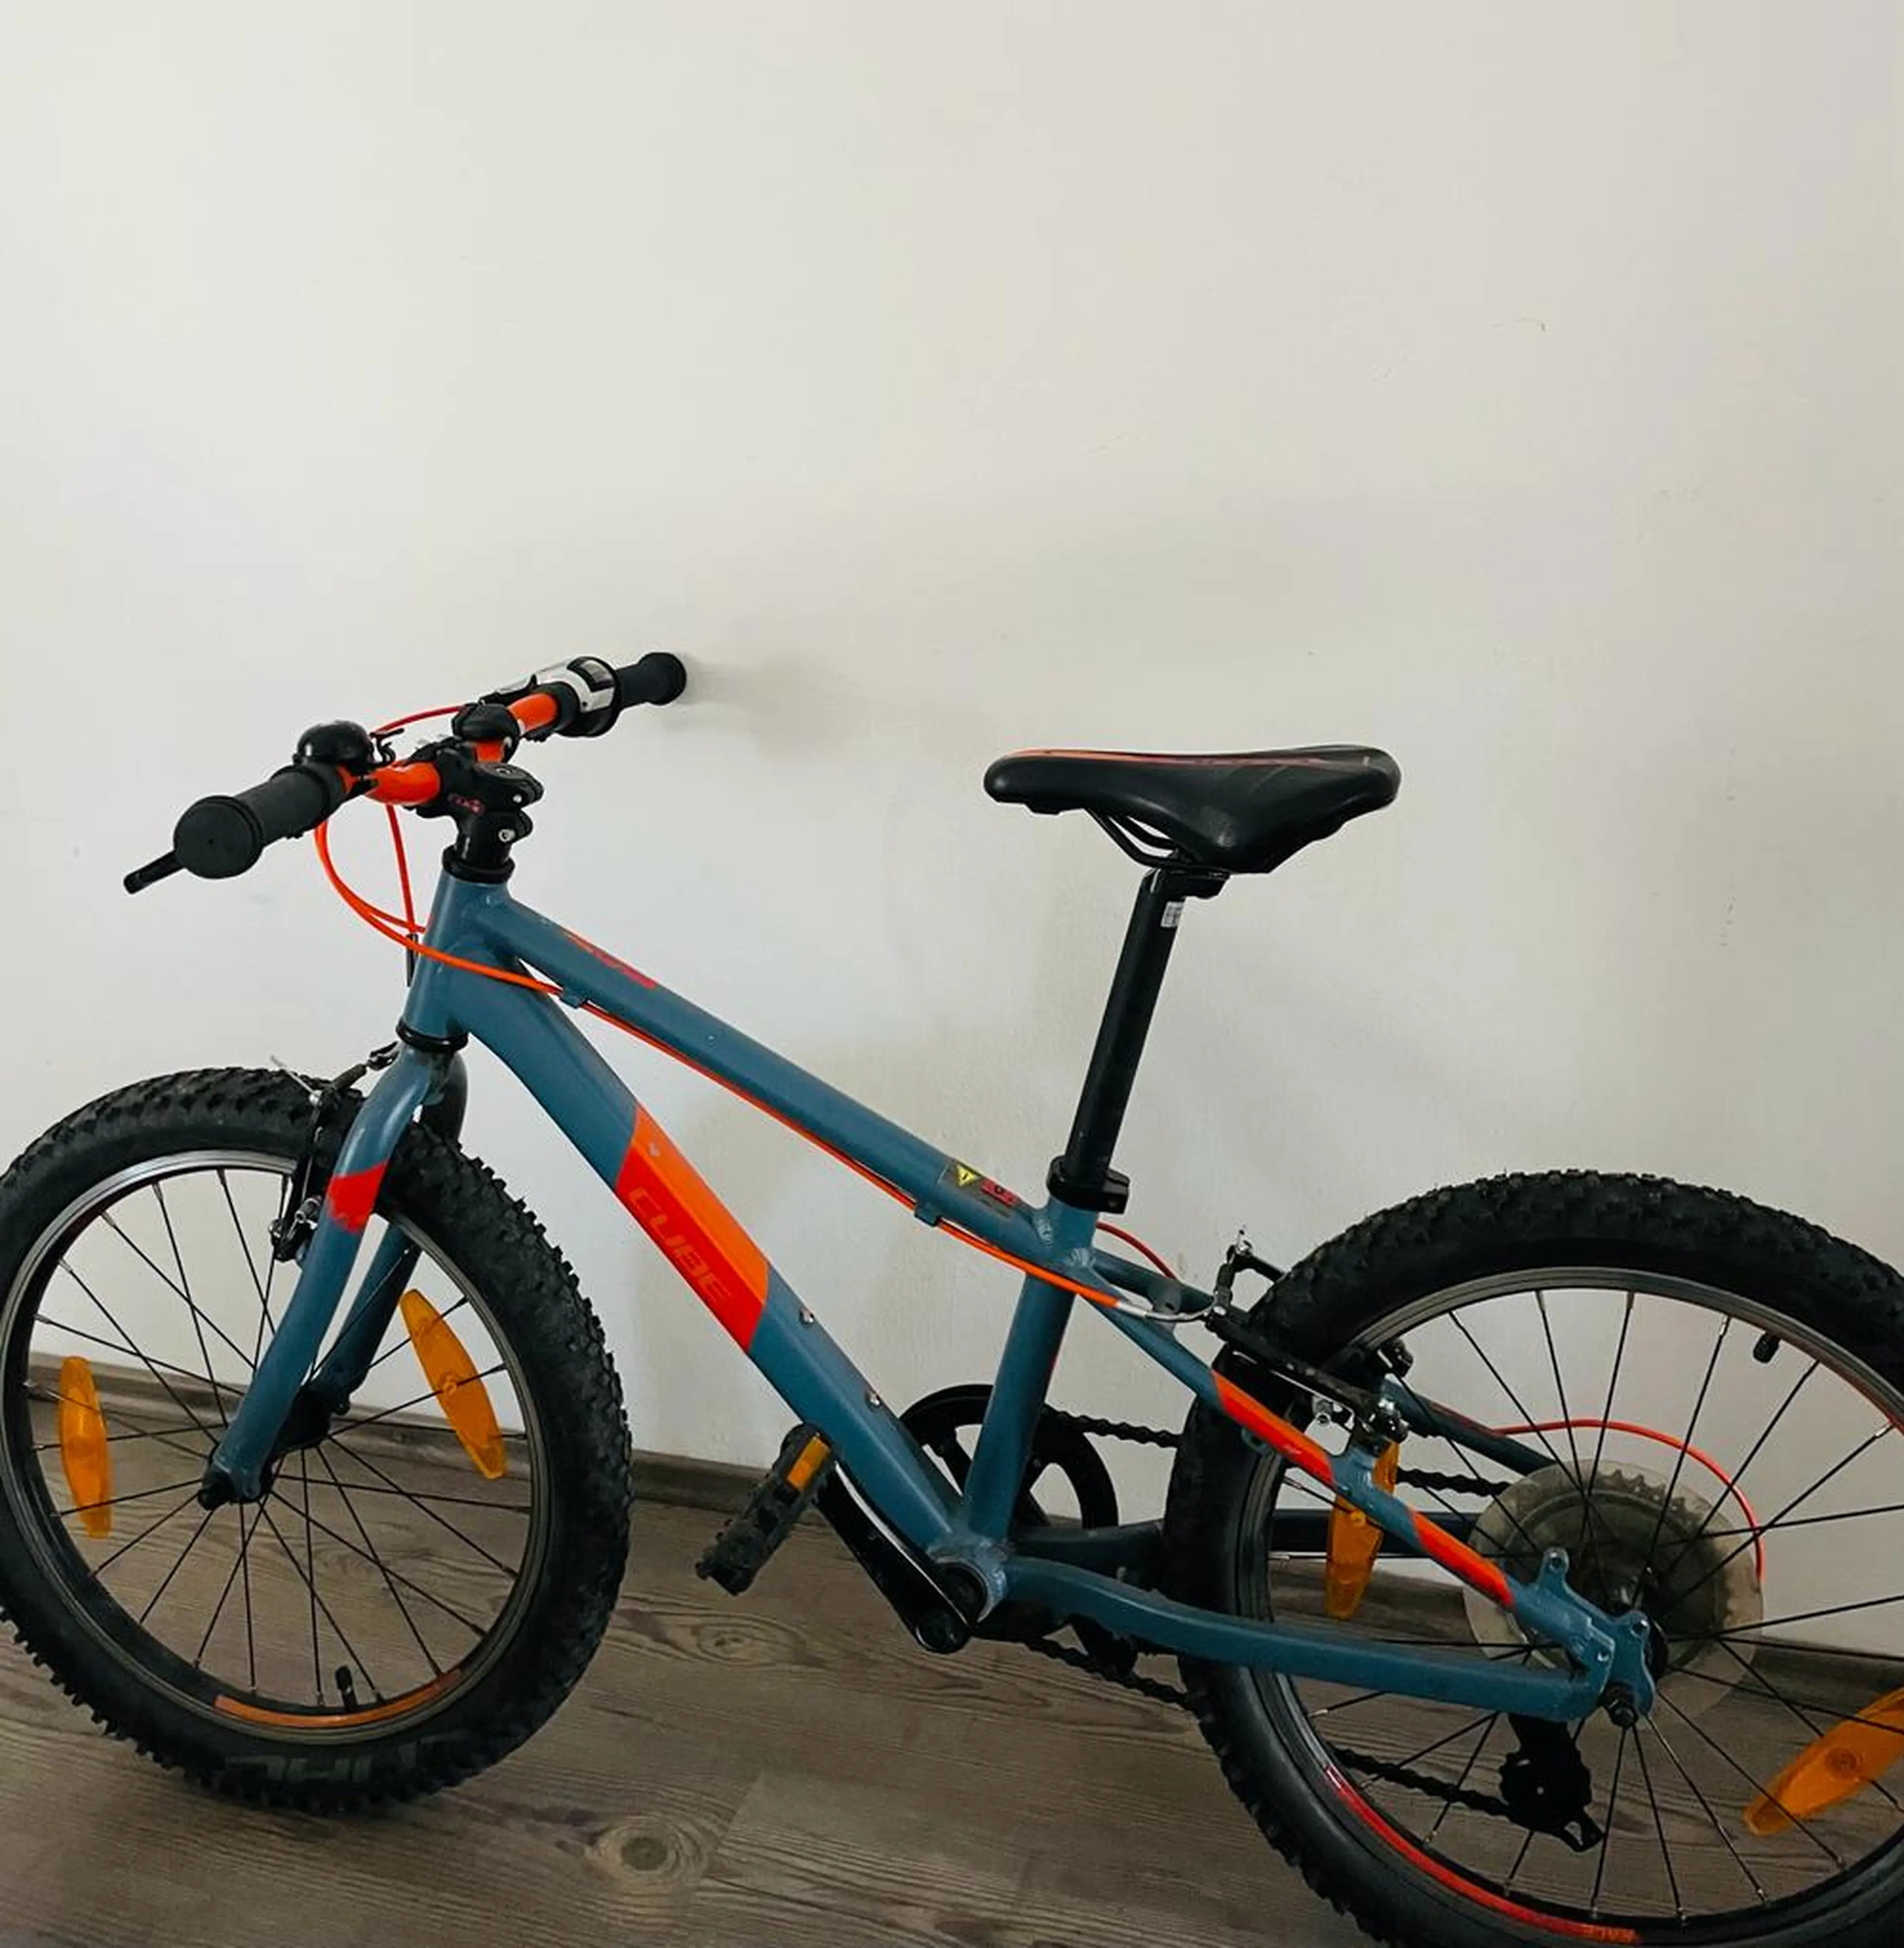 Image Vand Bicicleta Cube Acid 200, 20 inch, Grey - Orange